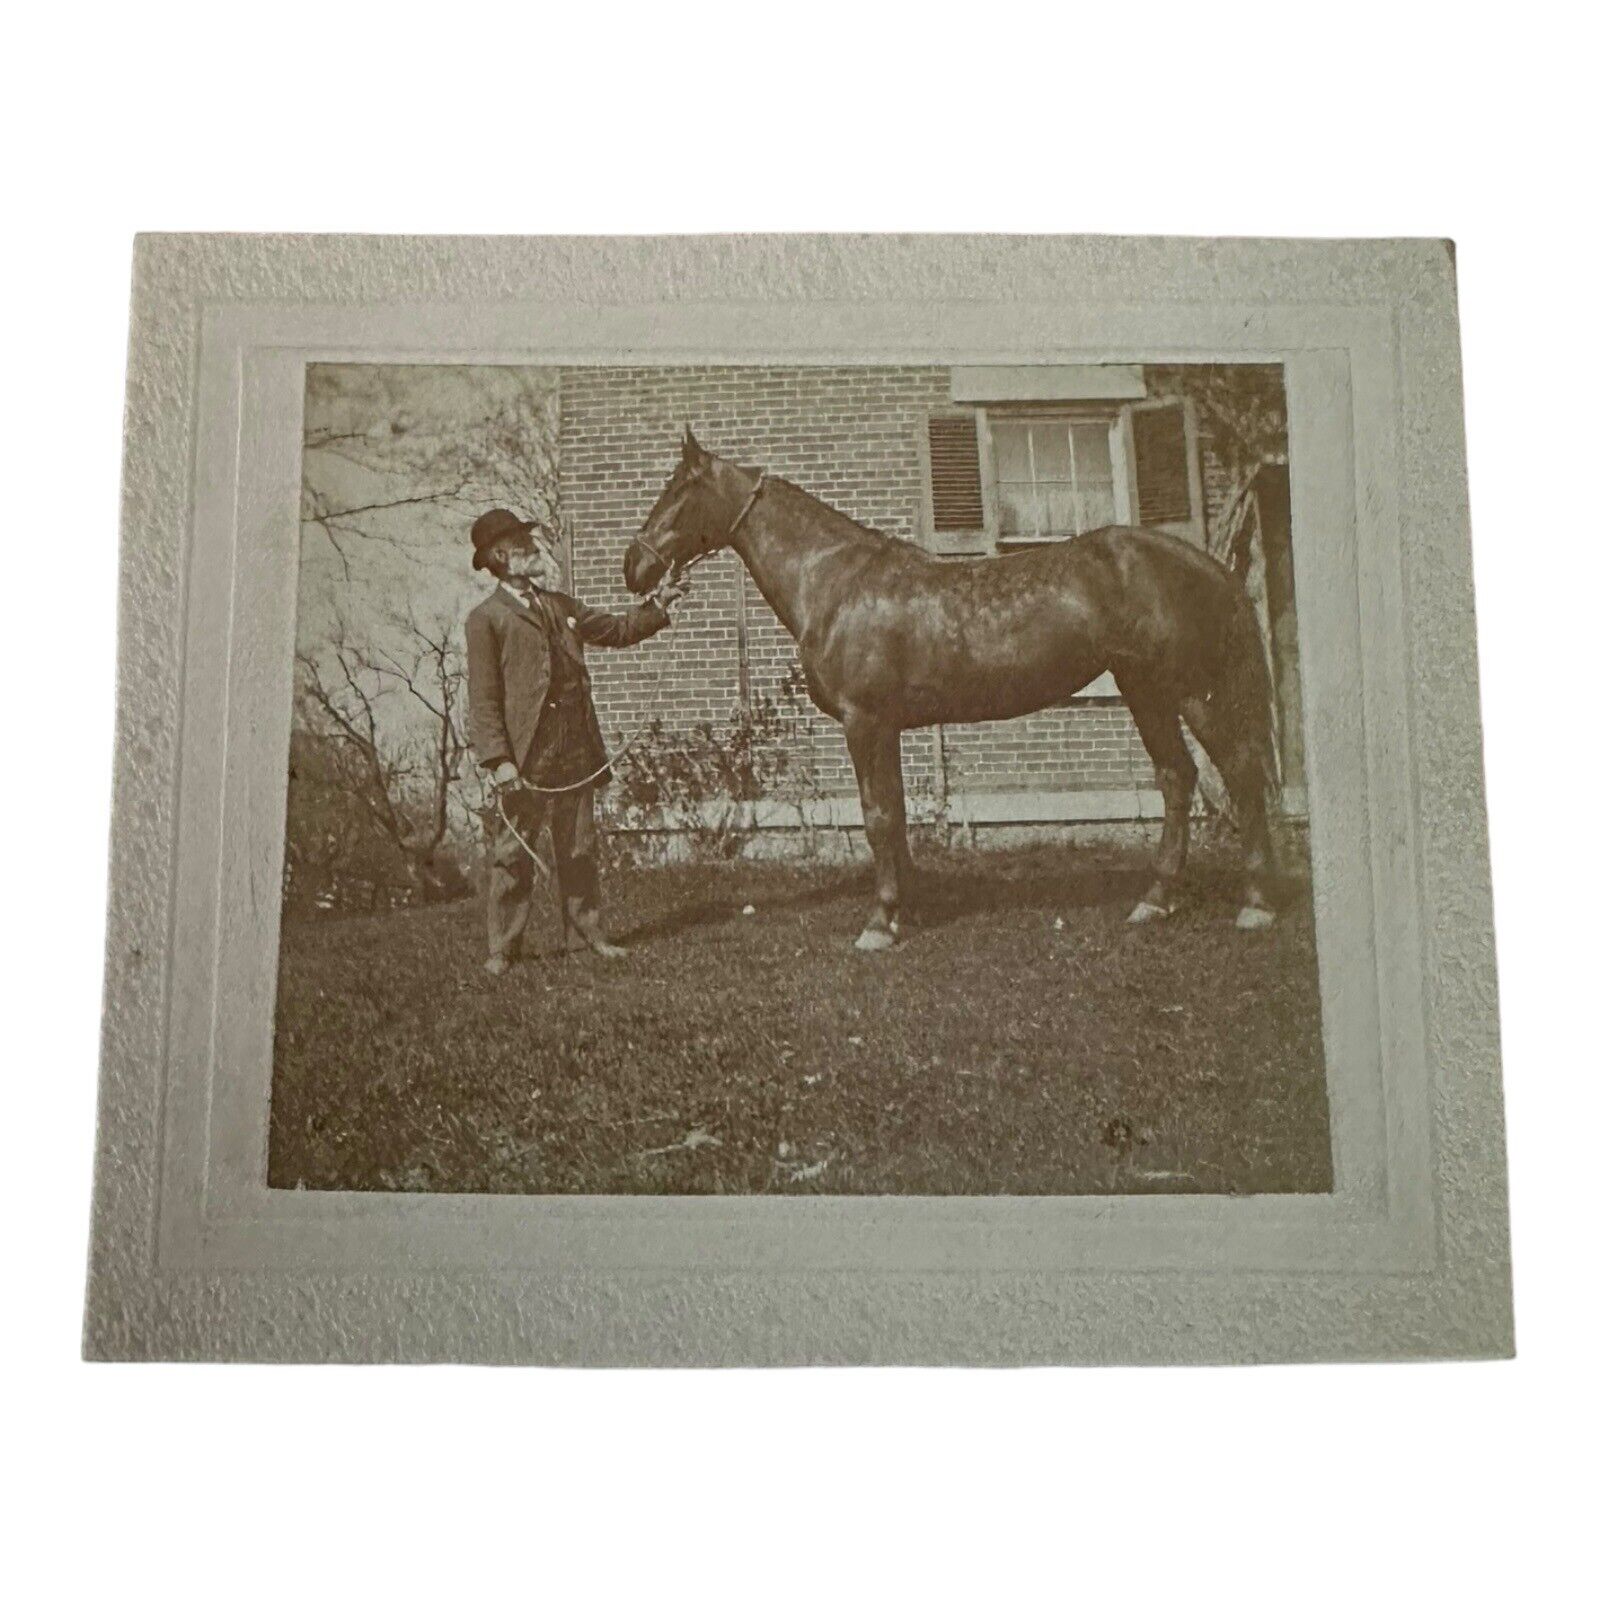 rare mounted photo 1898 man & horse early use of “SNAP SHOT” id’ed photographer